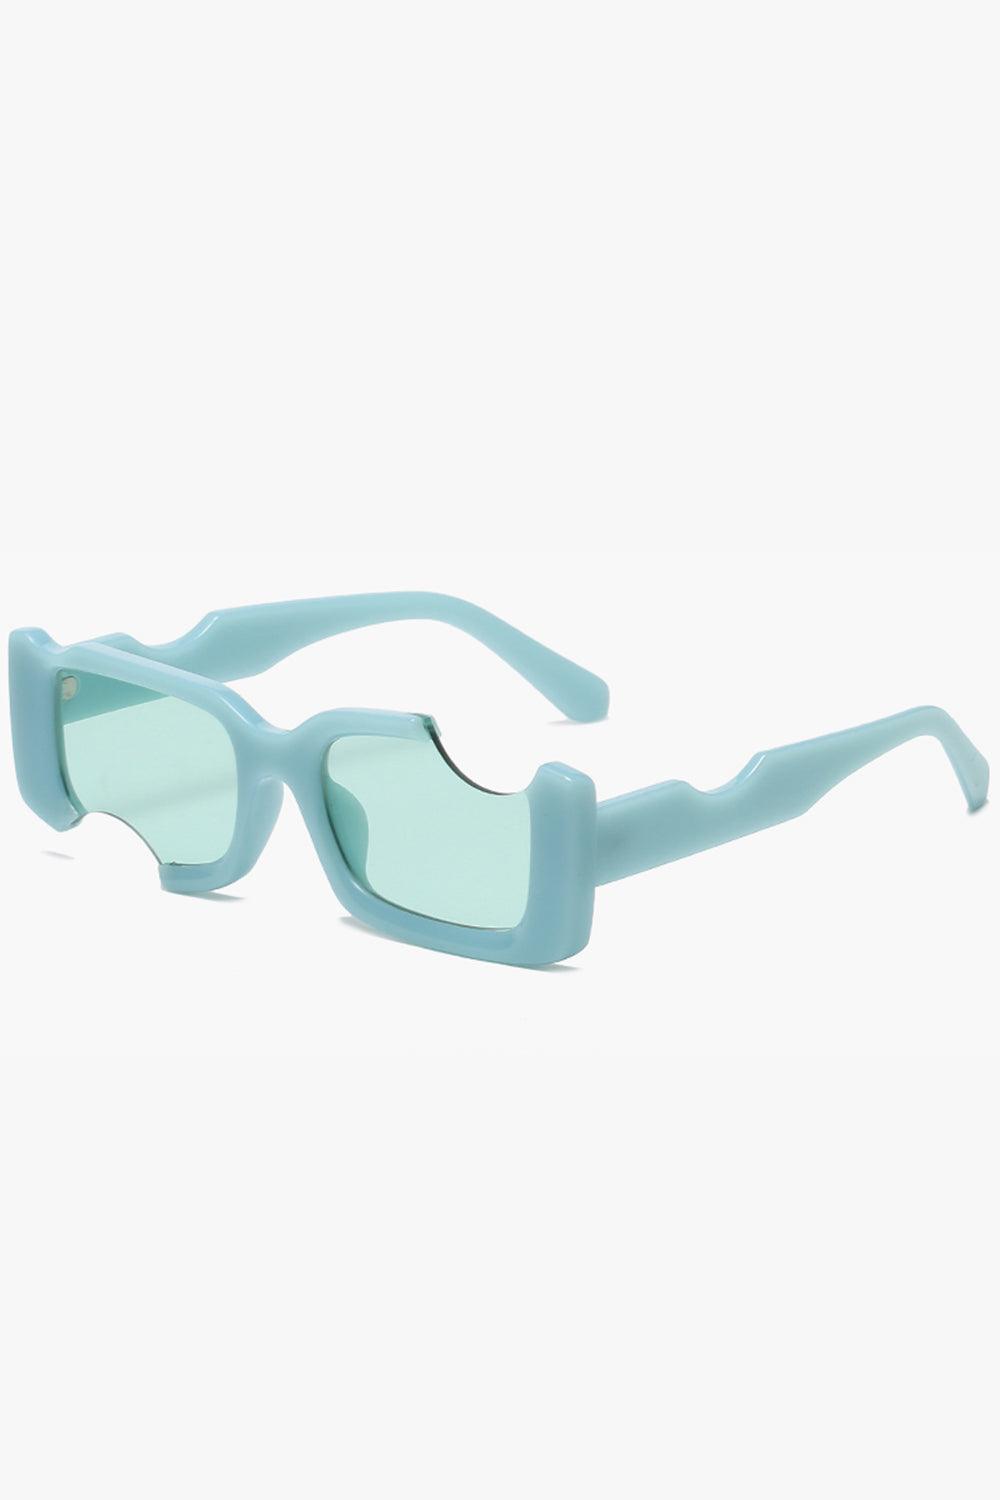 Bite Cuts Concave Glasses Square Frame - Aesthetic Clothes Shop